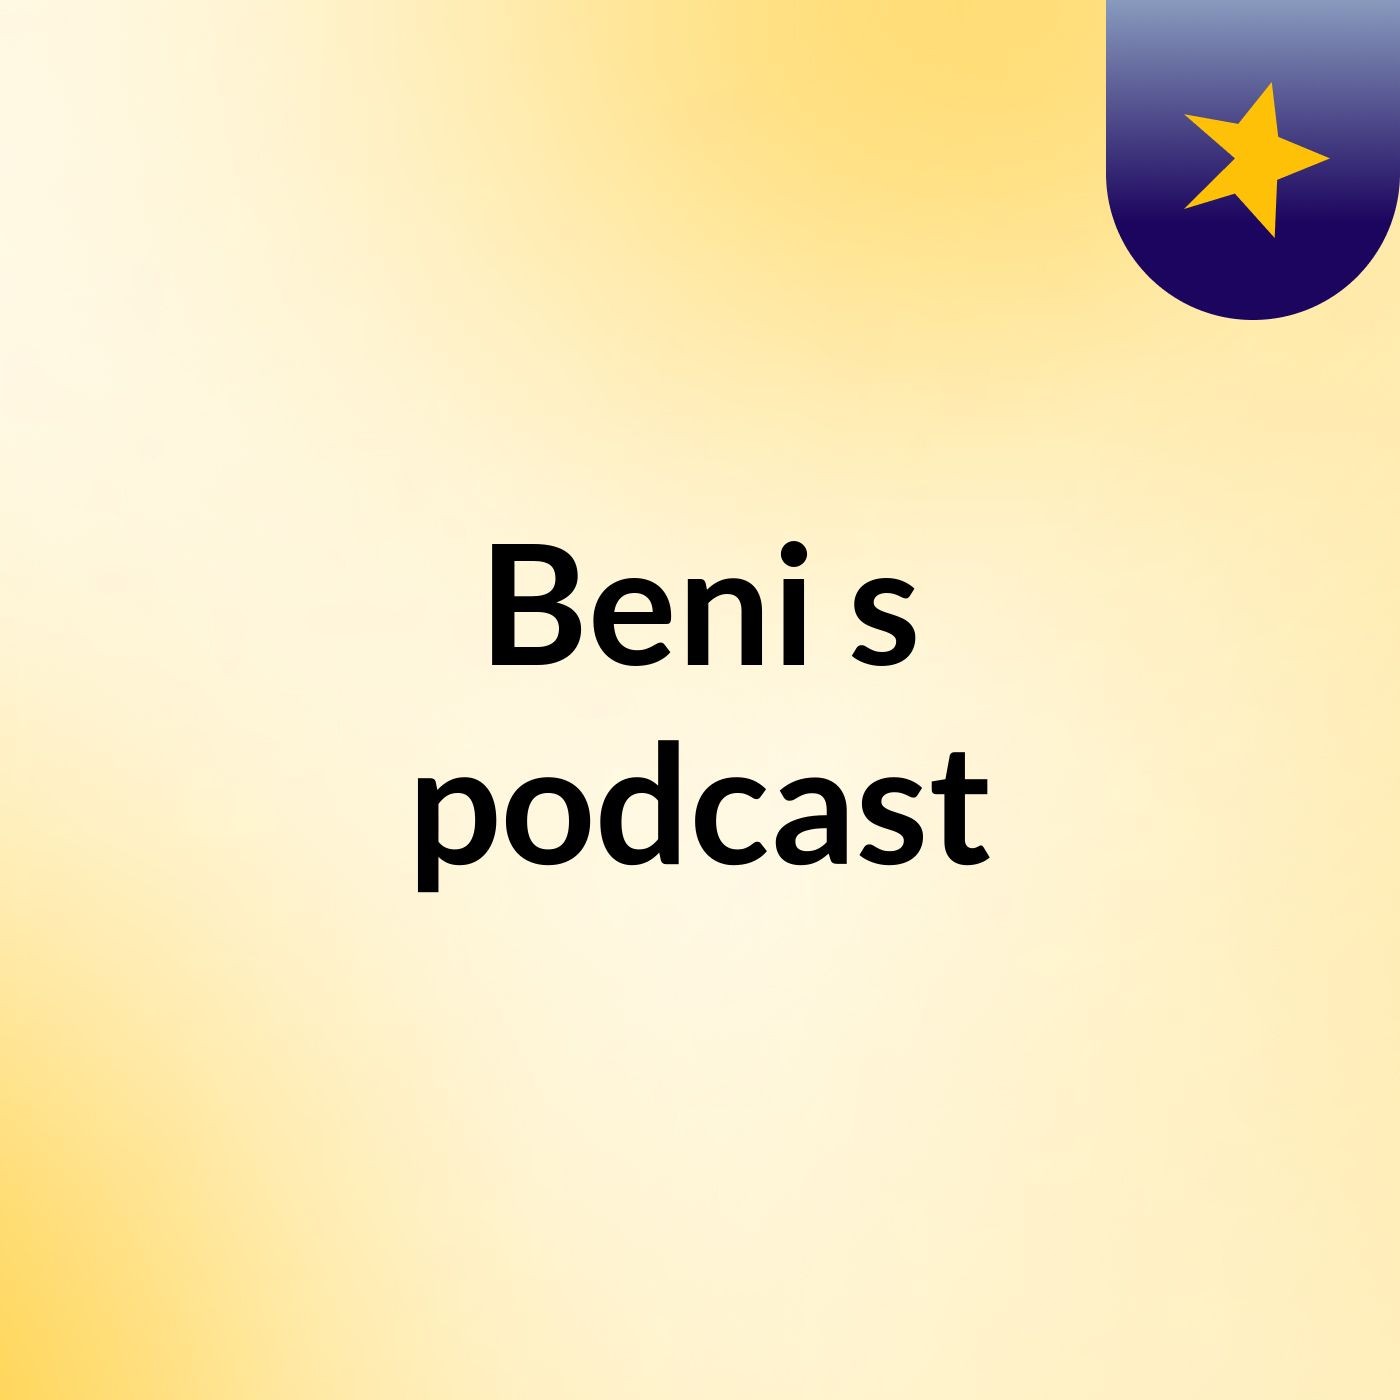 Episode 2 - Beni's podcast